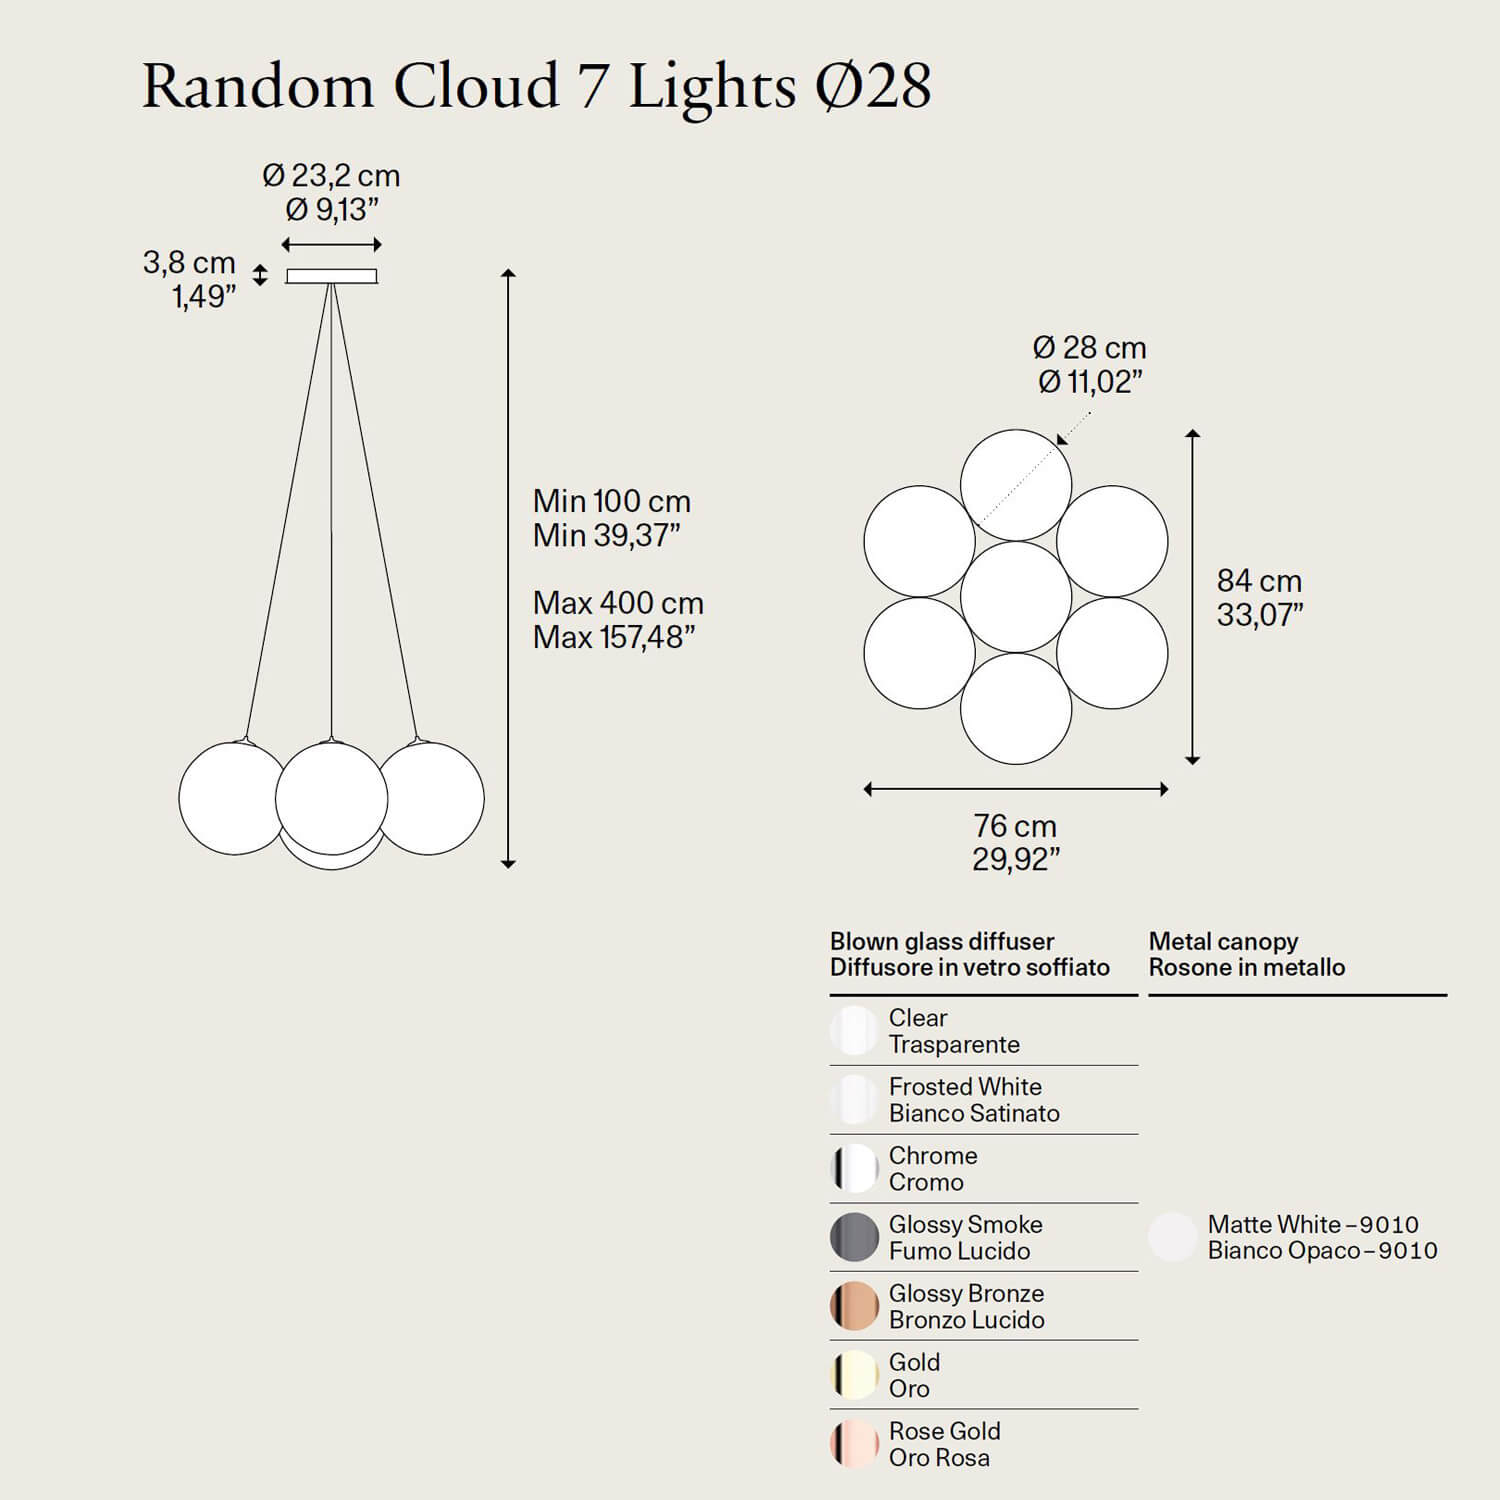 Random Cloud 7 Lights Ø28 by Lodes